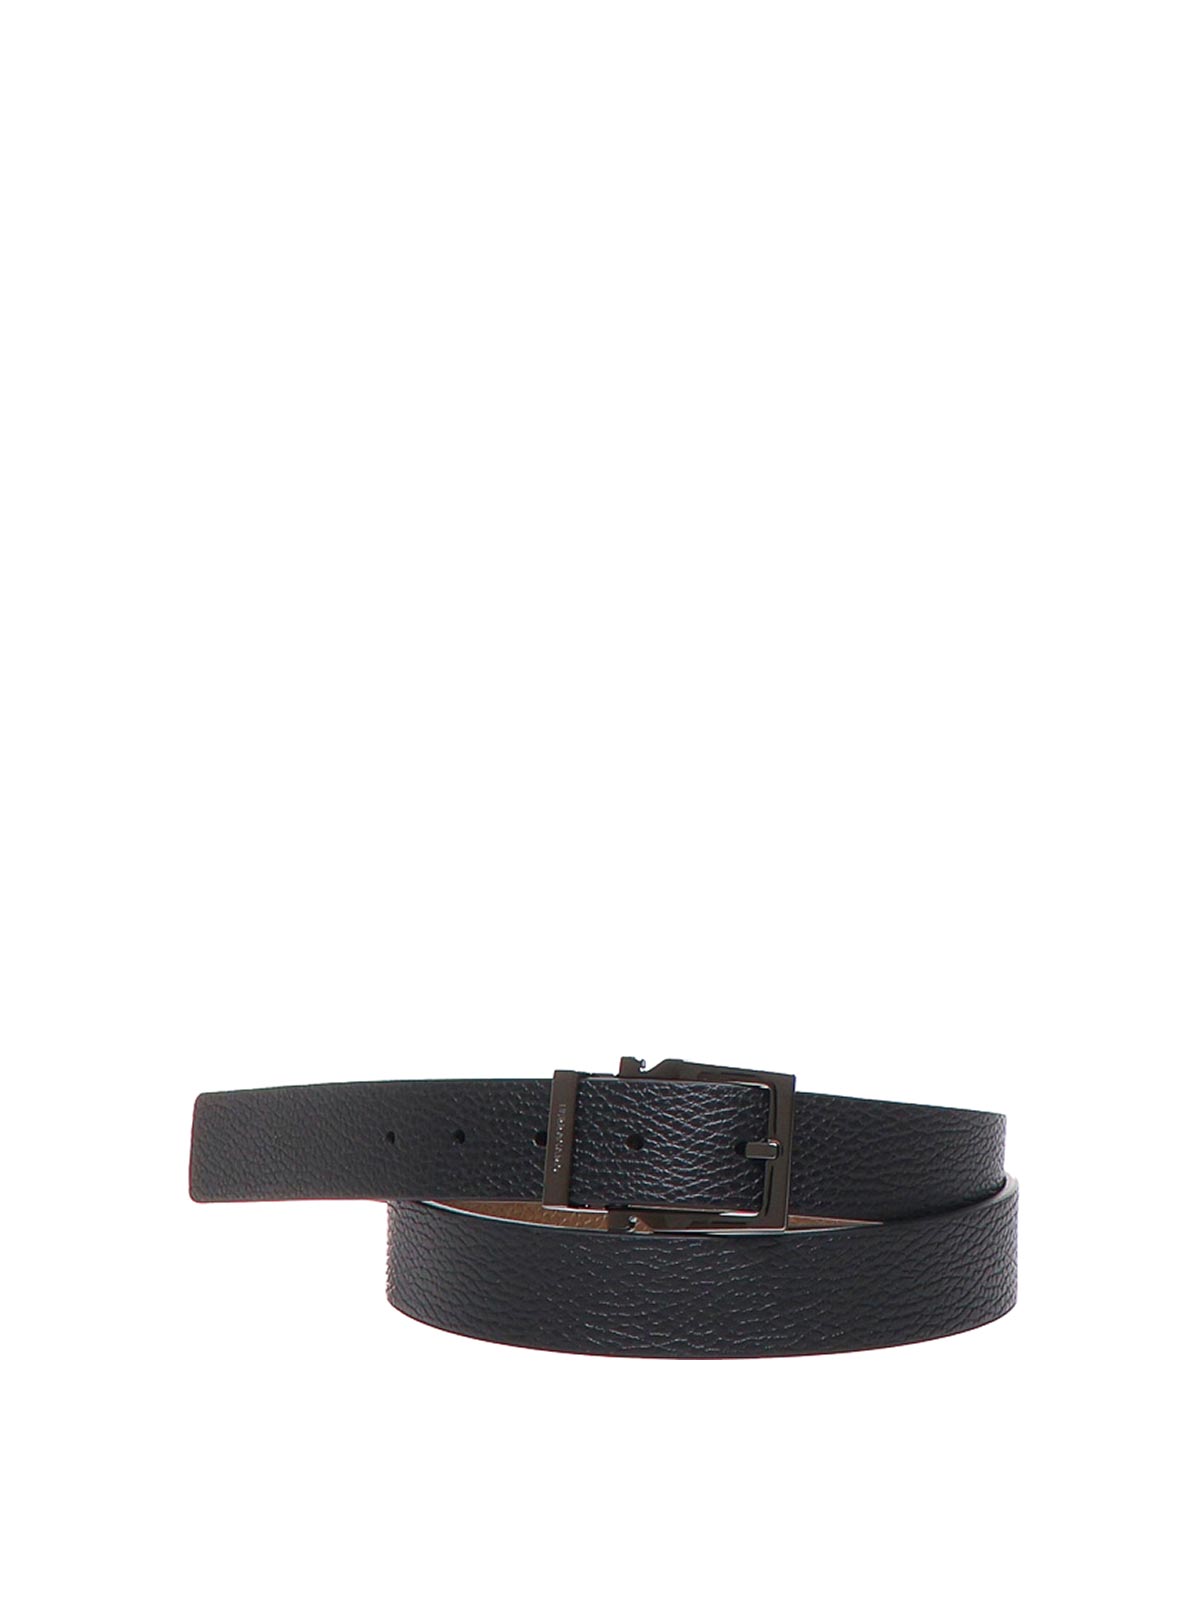 Ferragamo Leather Belt In Black